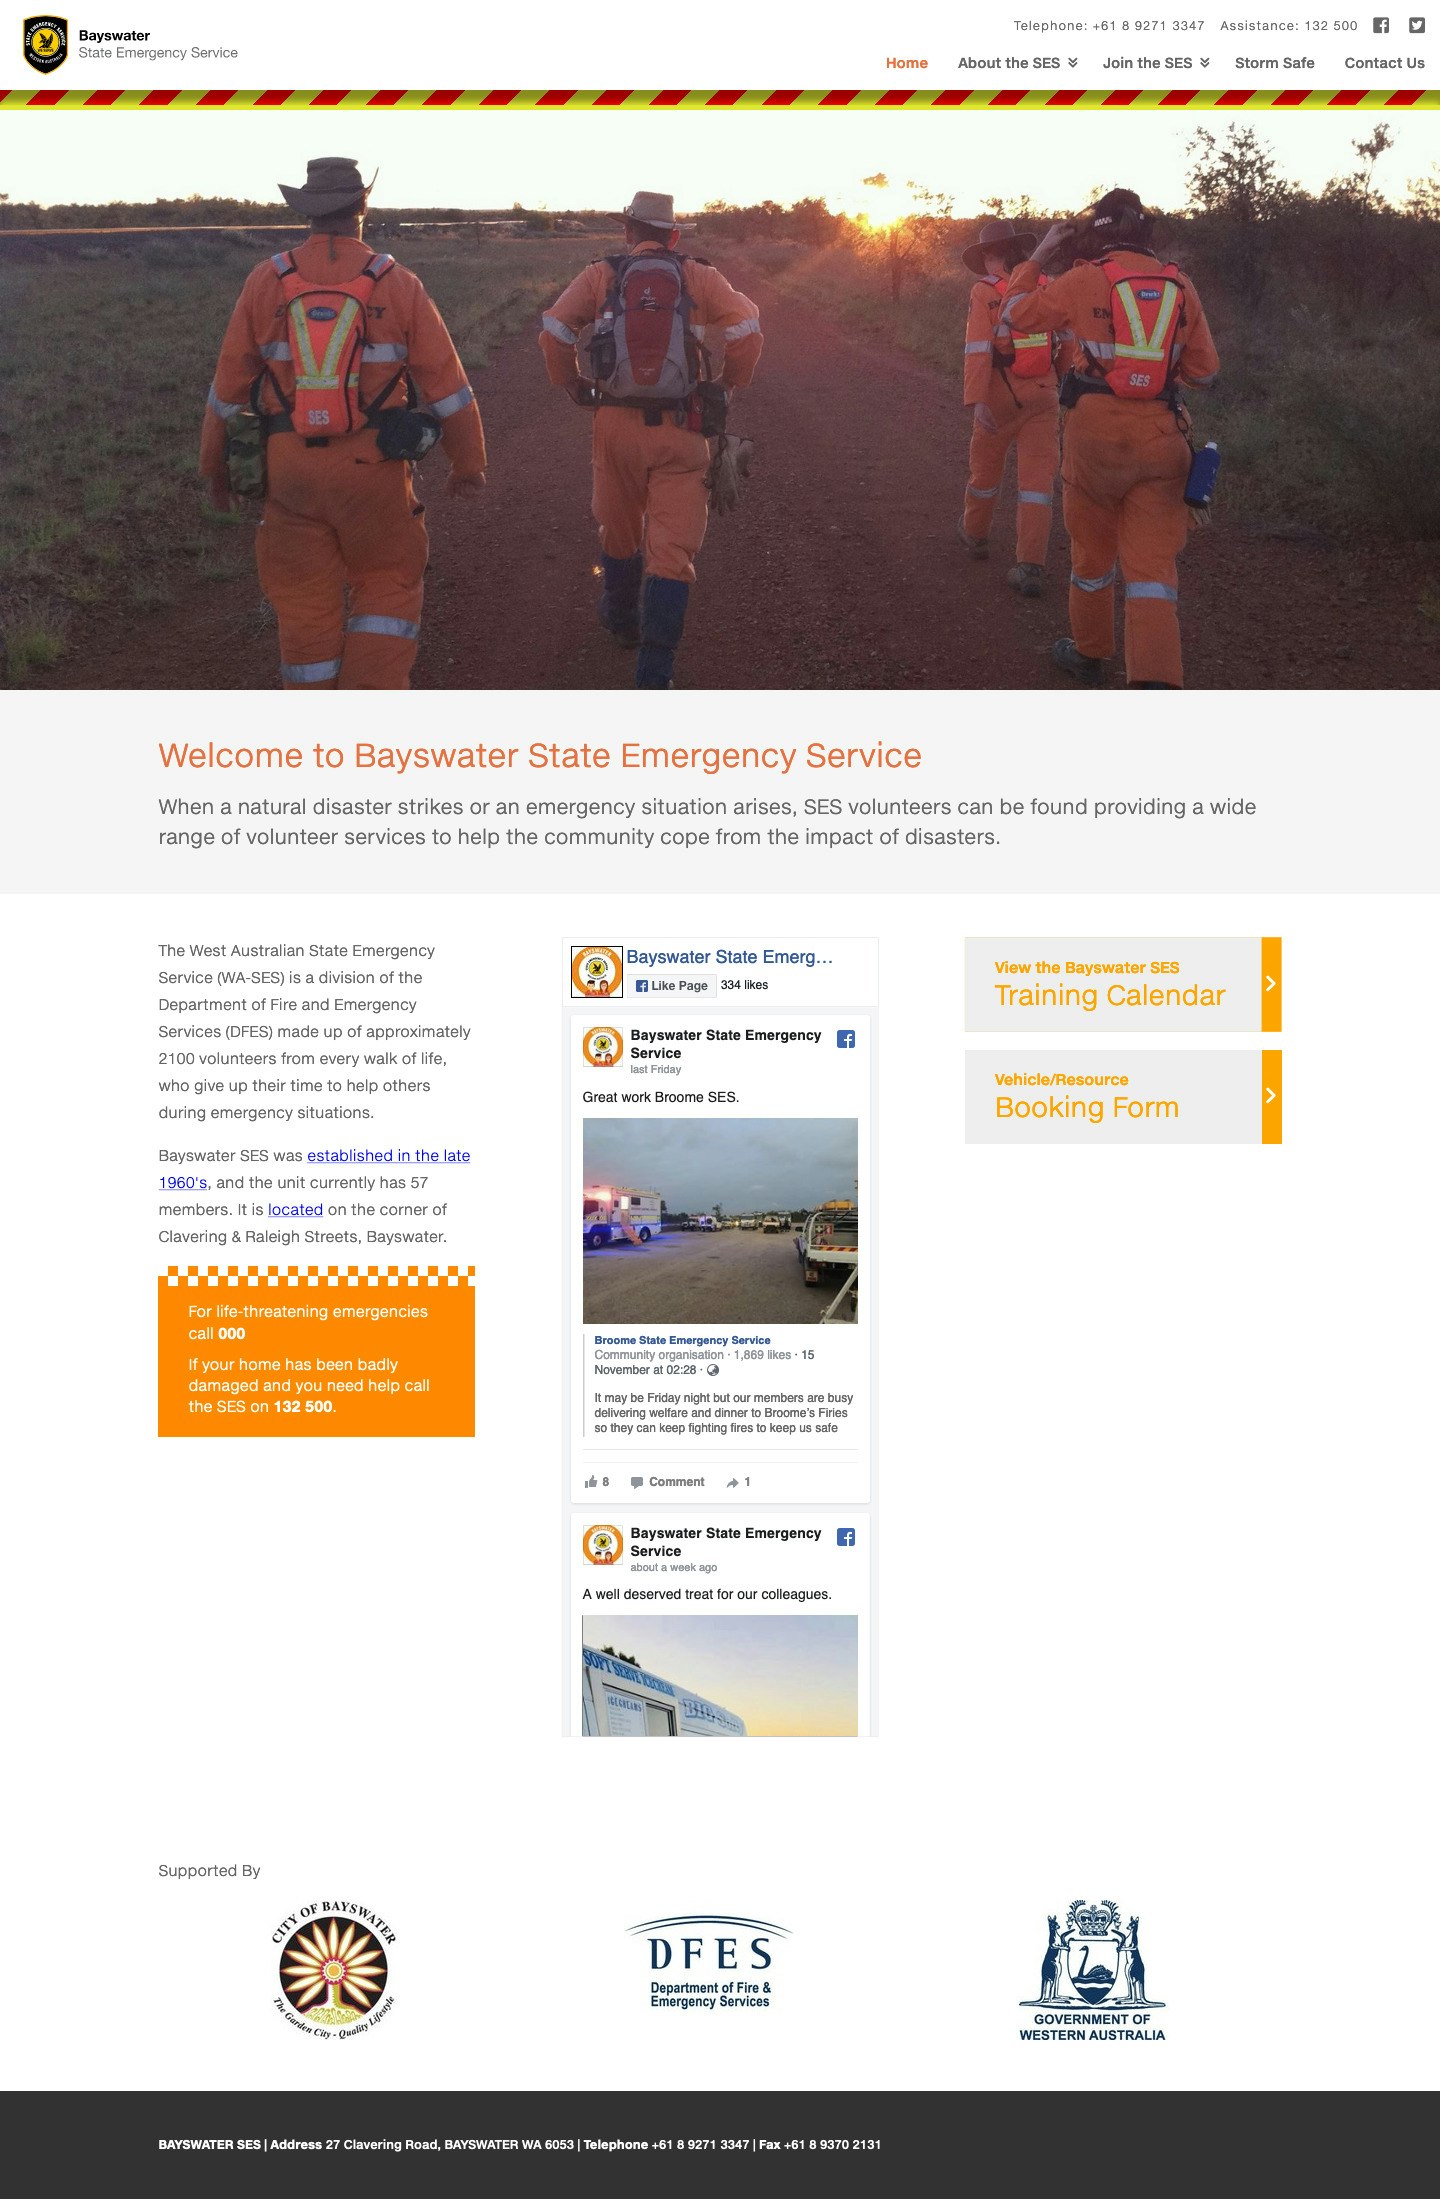 Bayswater State Emergency Services website homepage